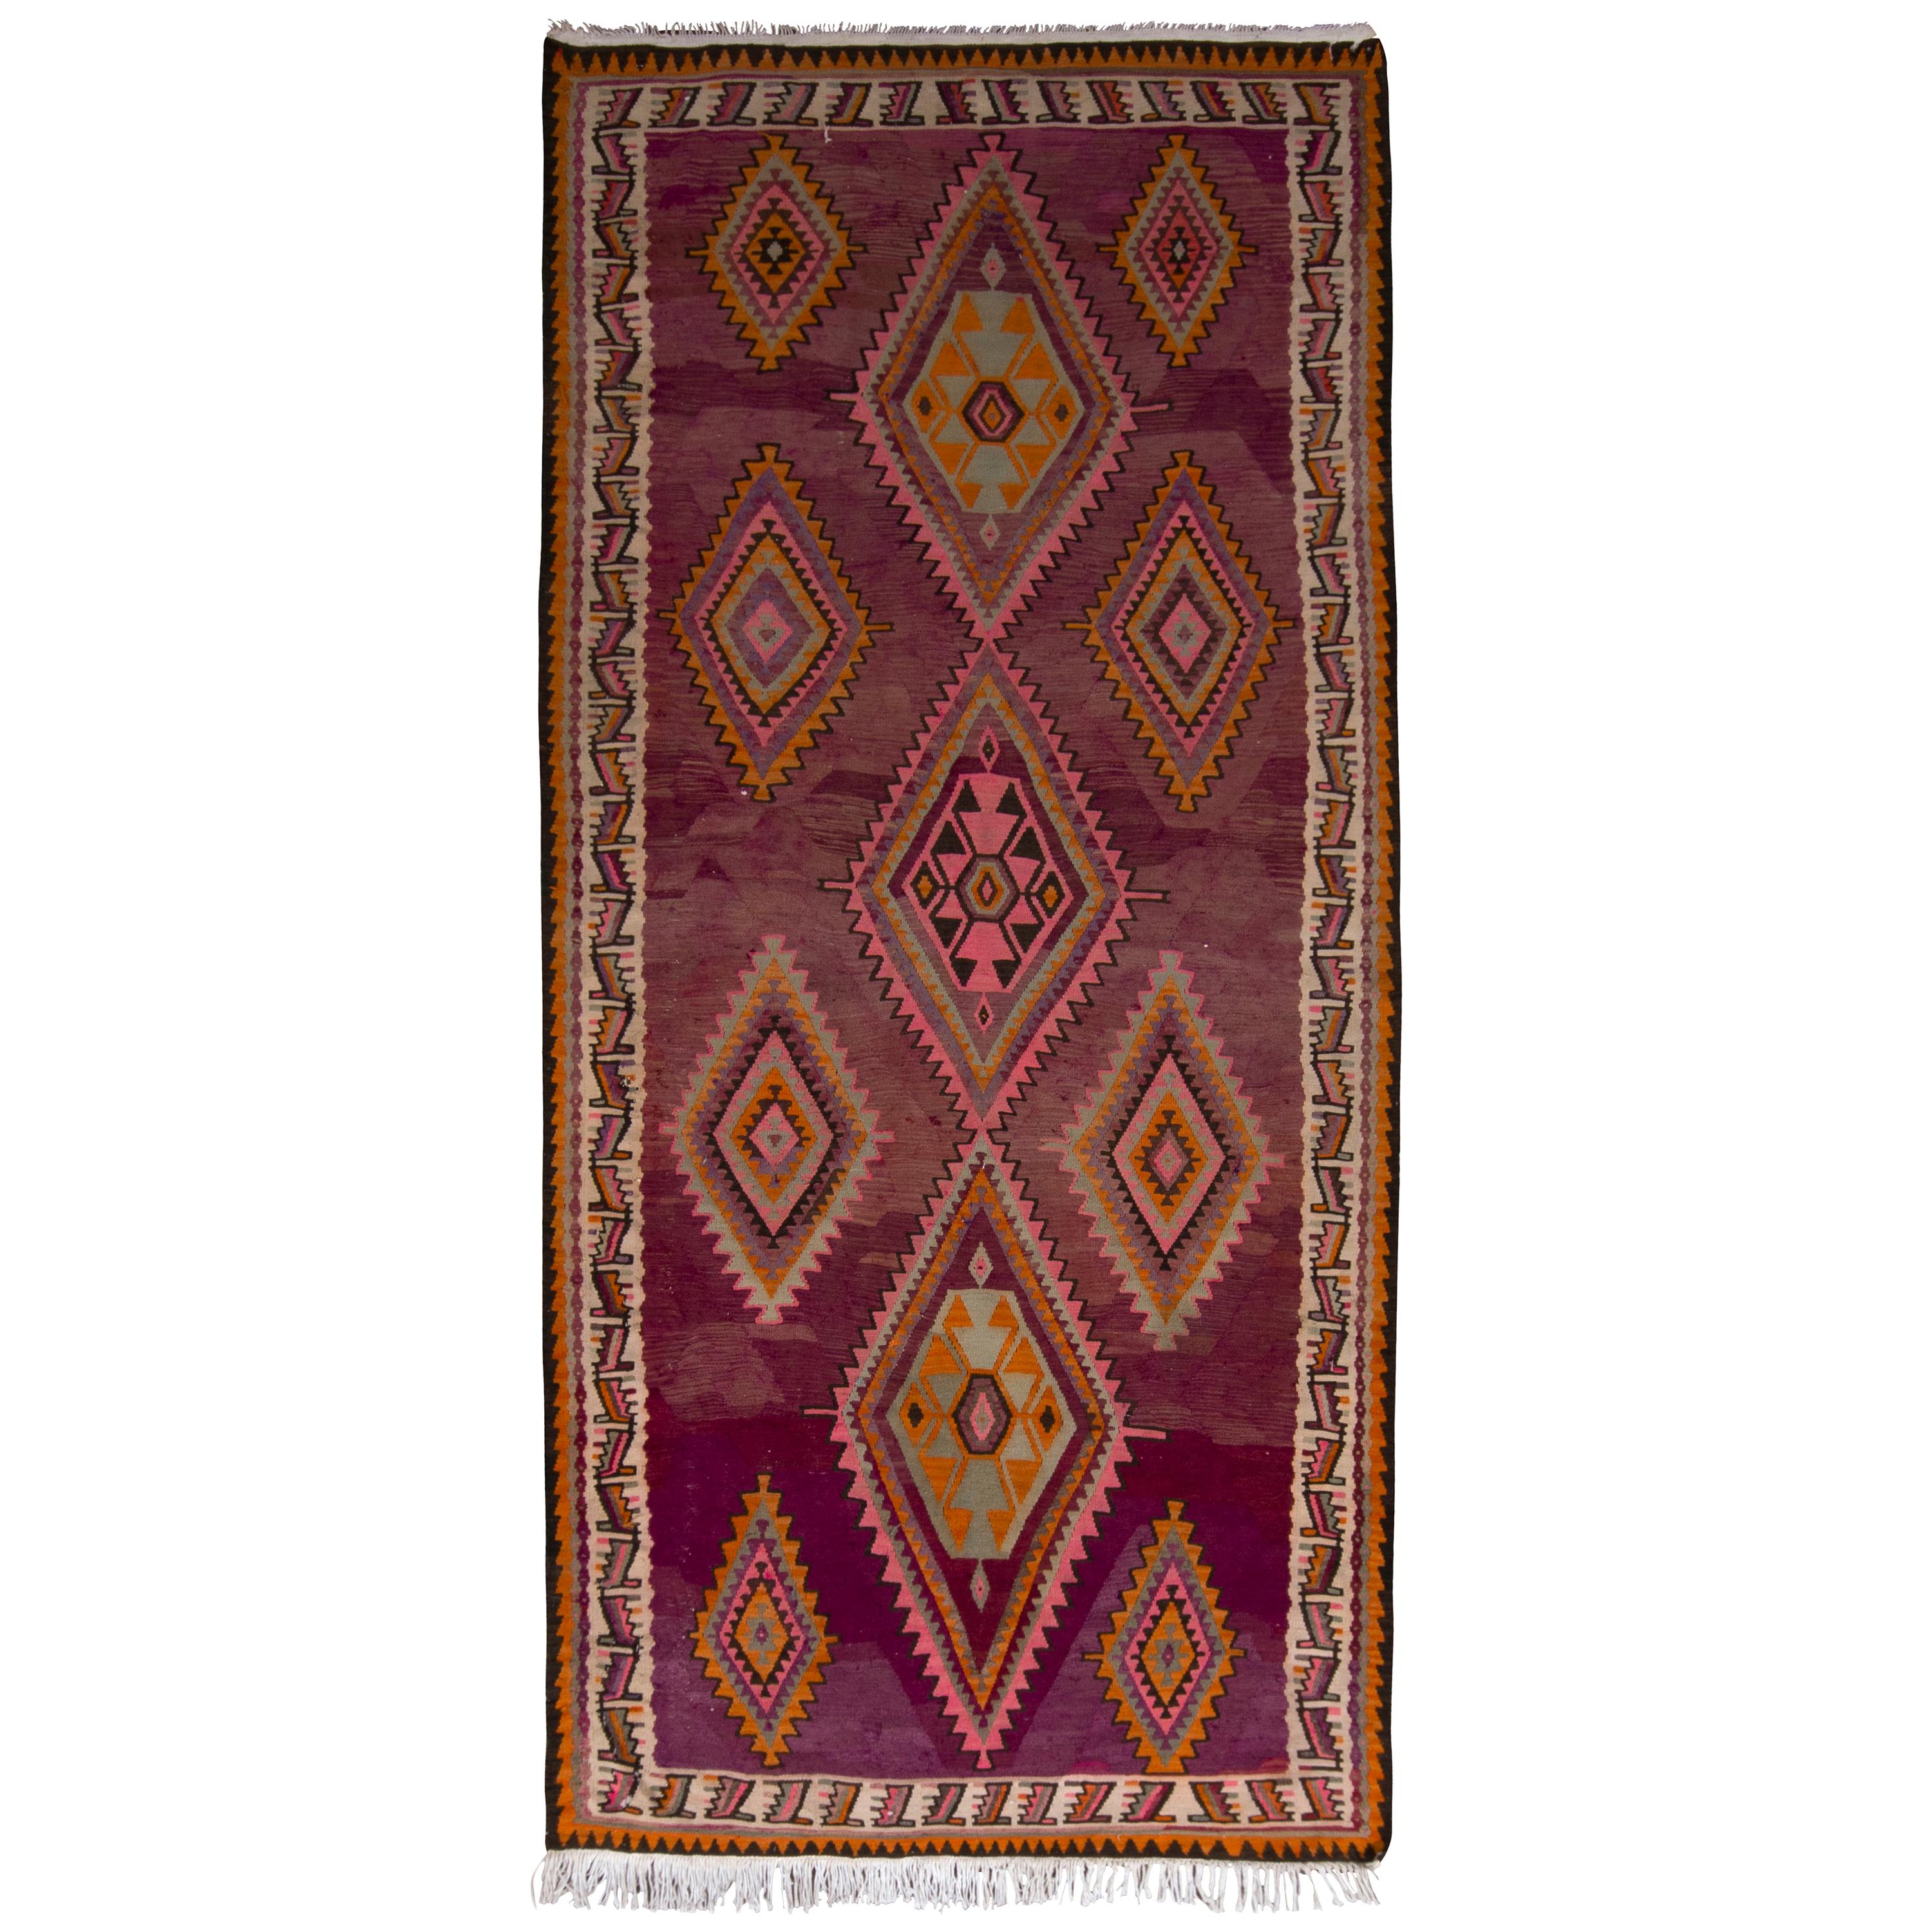 Midcentury Flat-Weave, Geometric Beige, Pink, and Orange Persian Kilim Rug